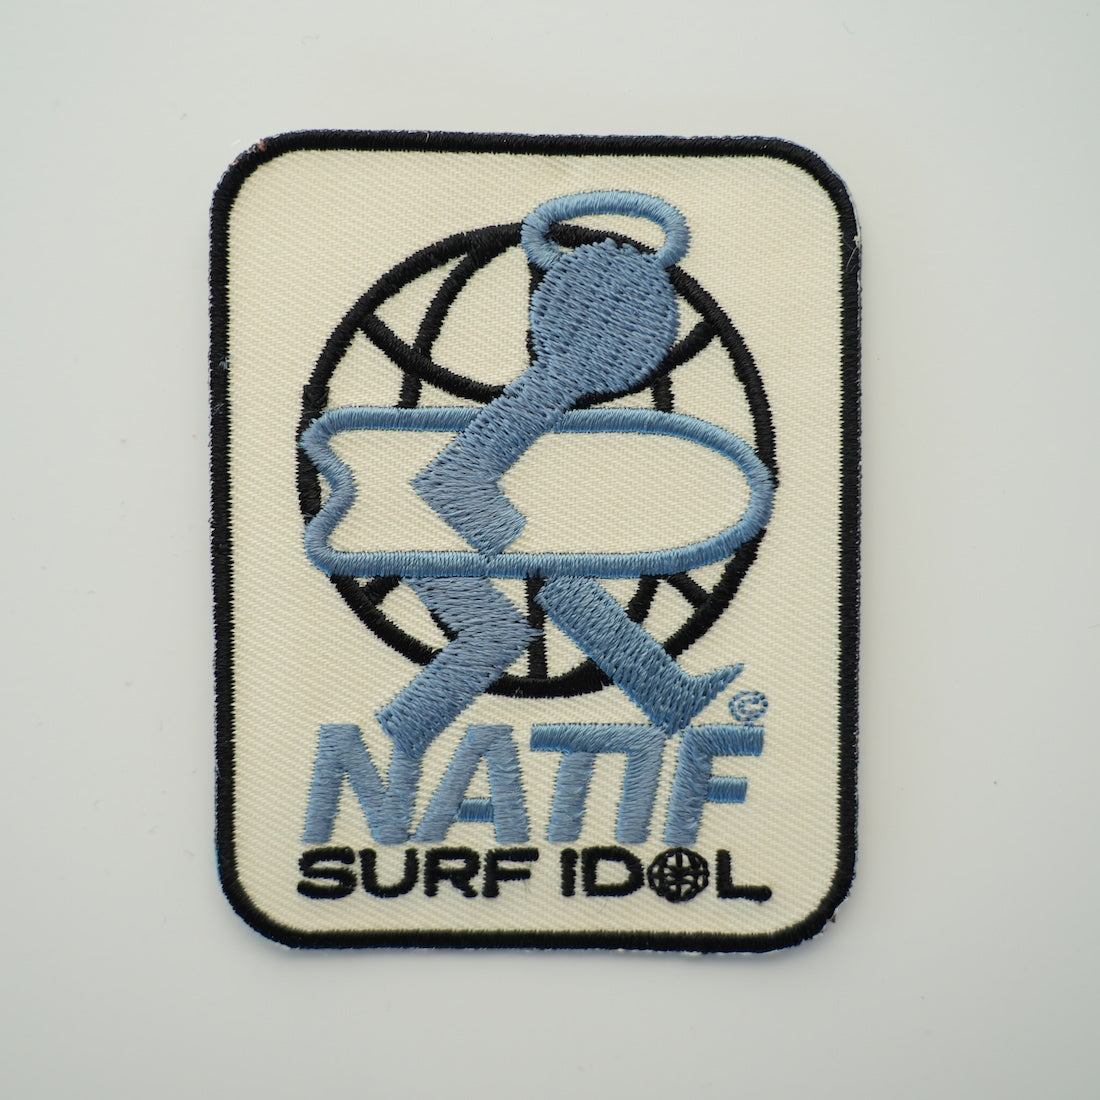 Patch Natif surf idol